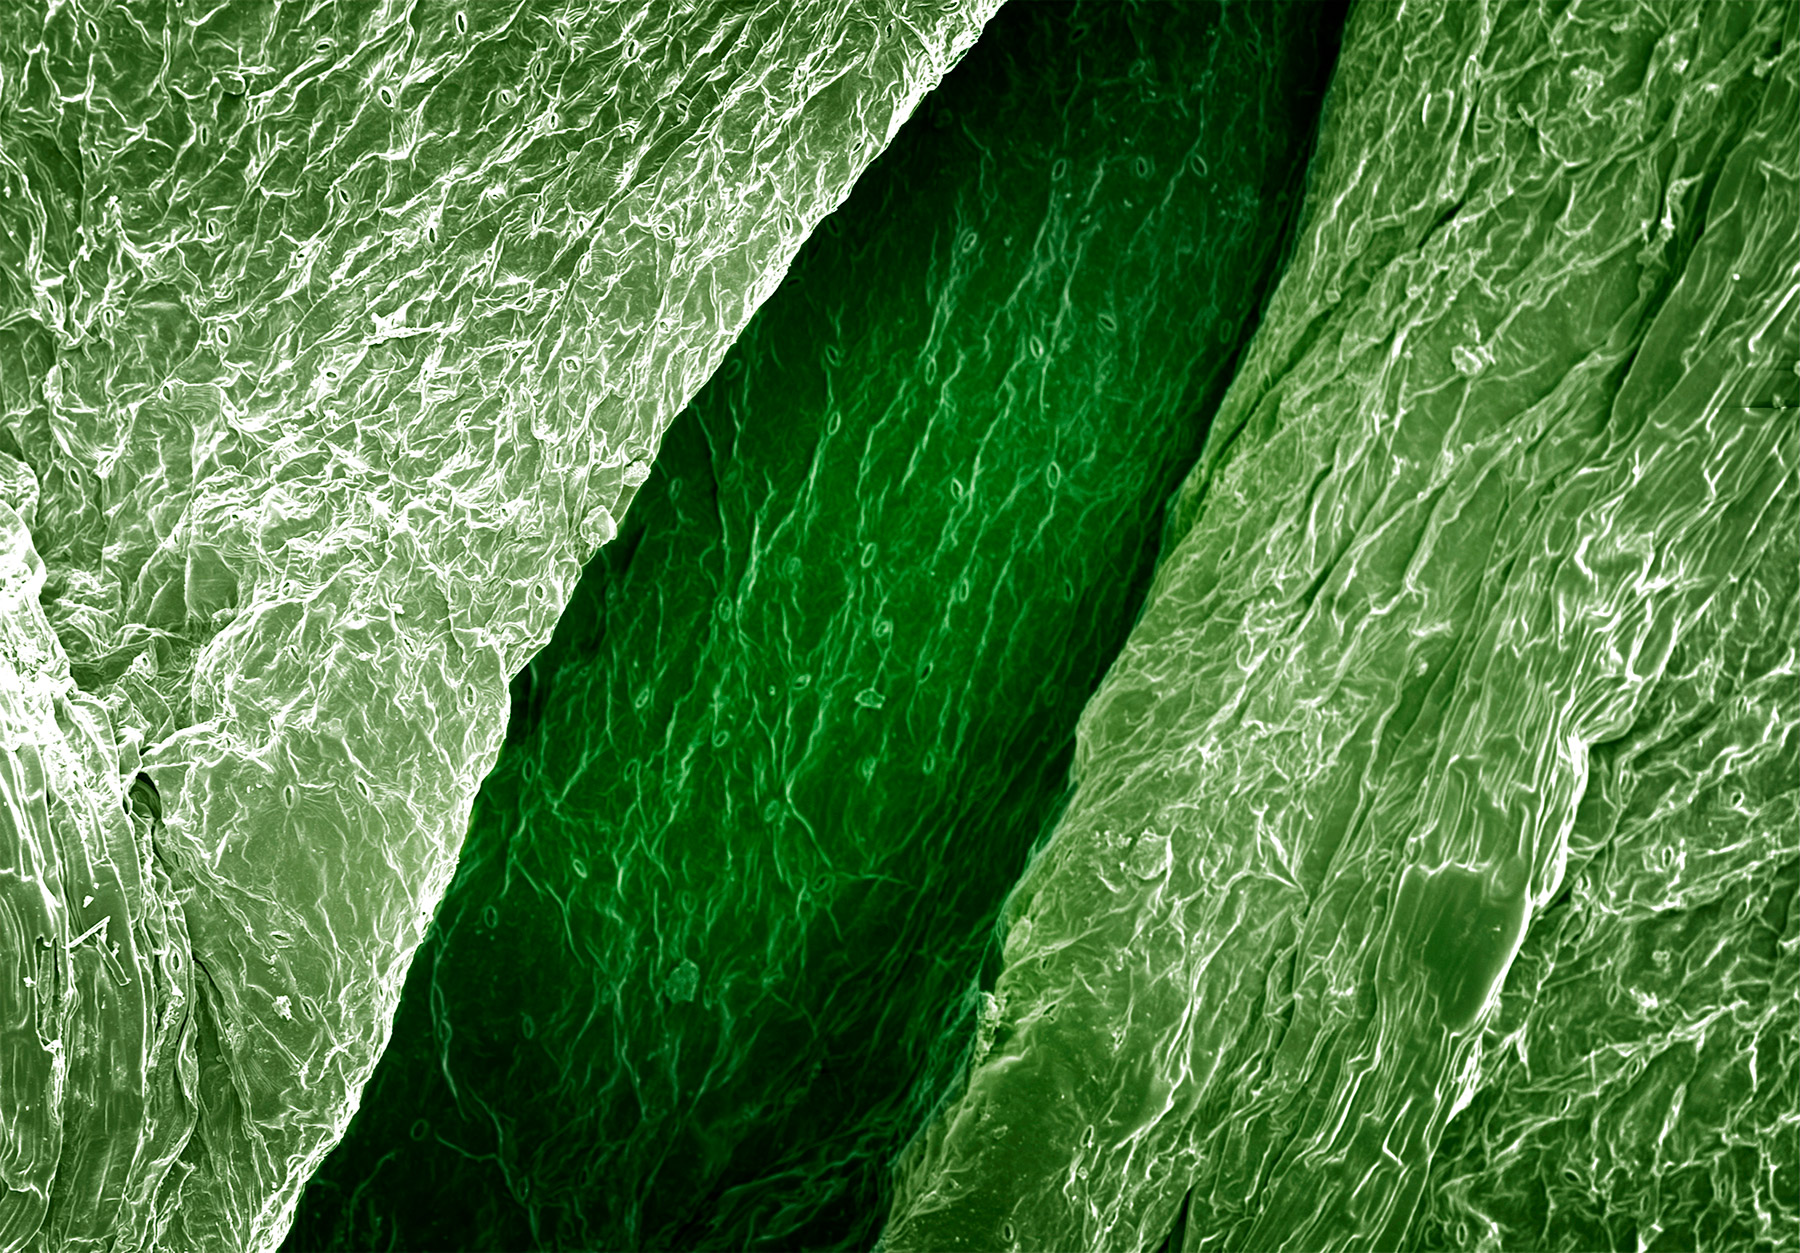  terra cibus no.3: celery leaf  85x magnification 